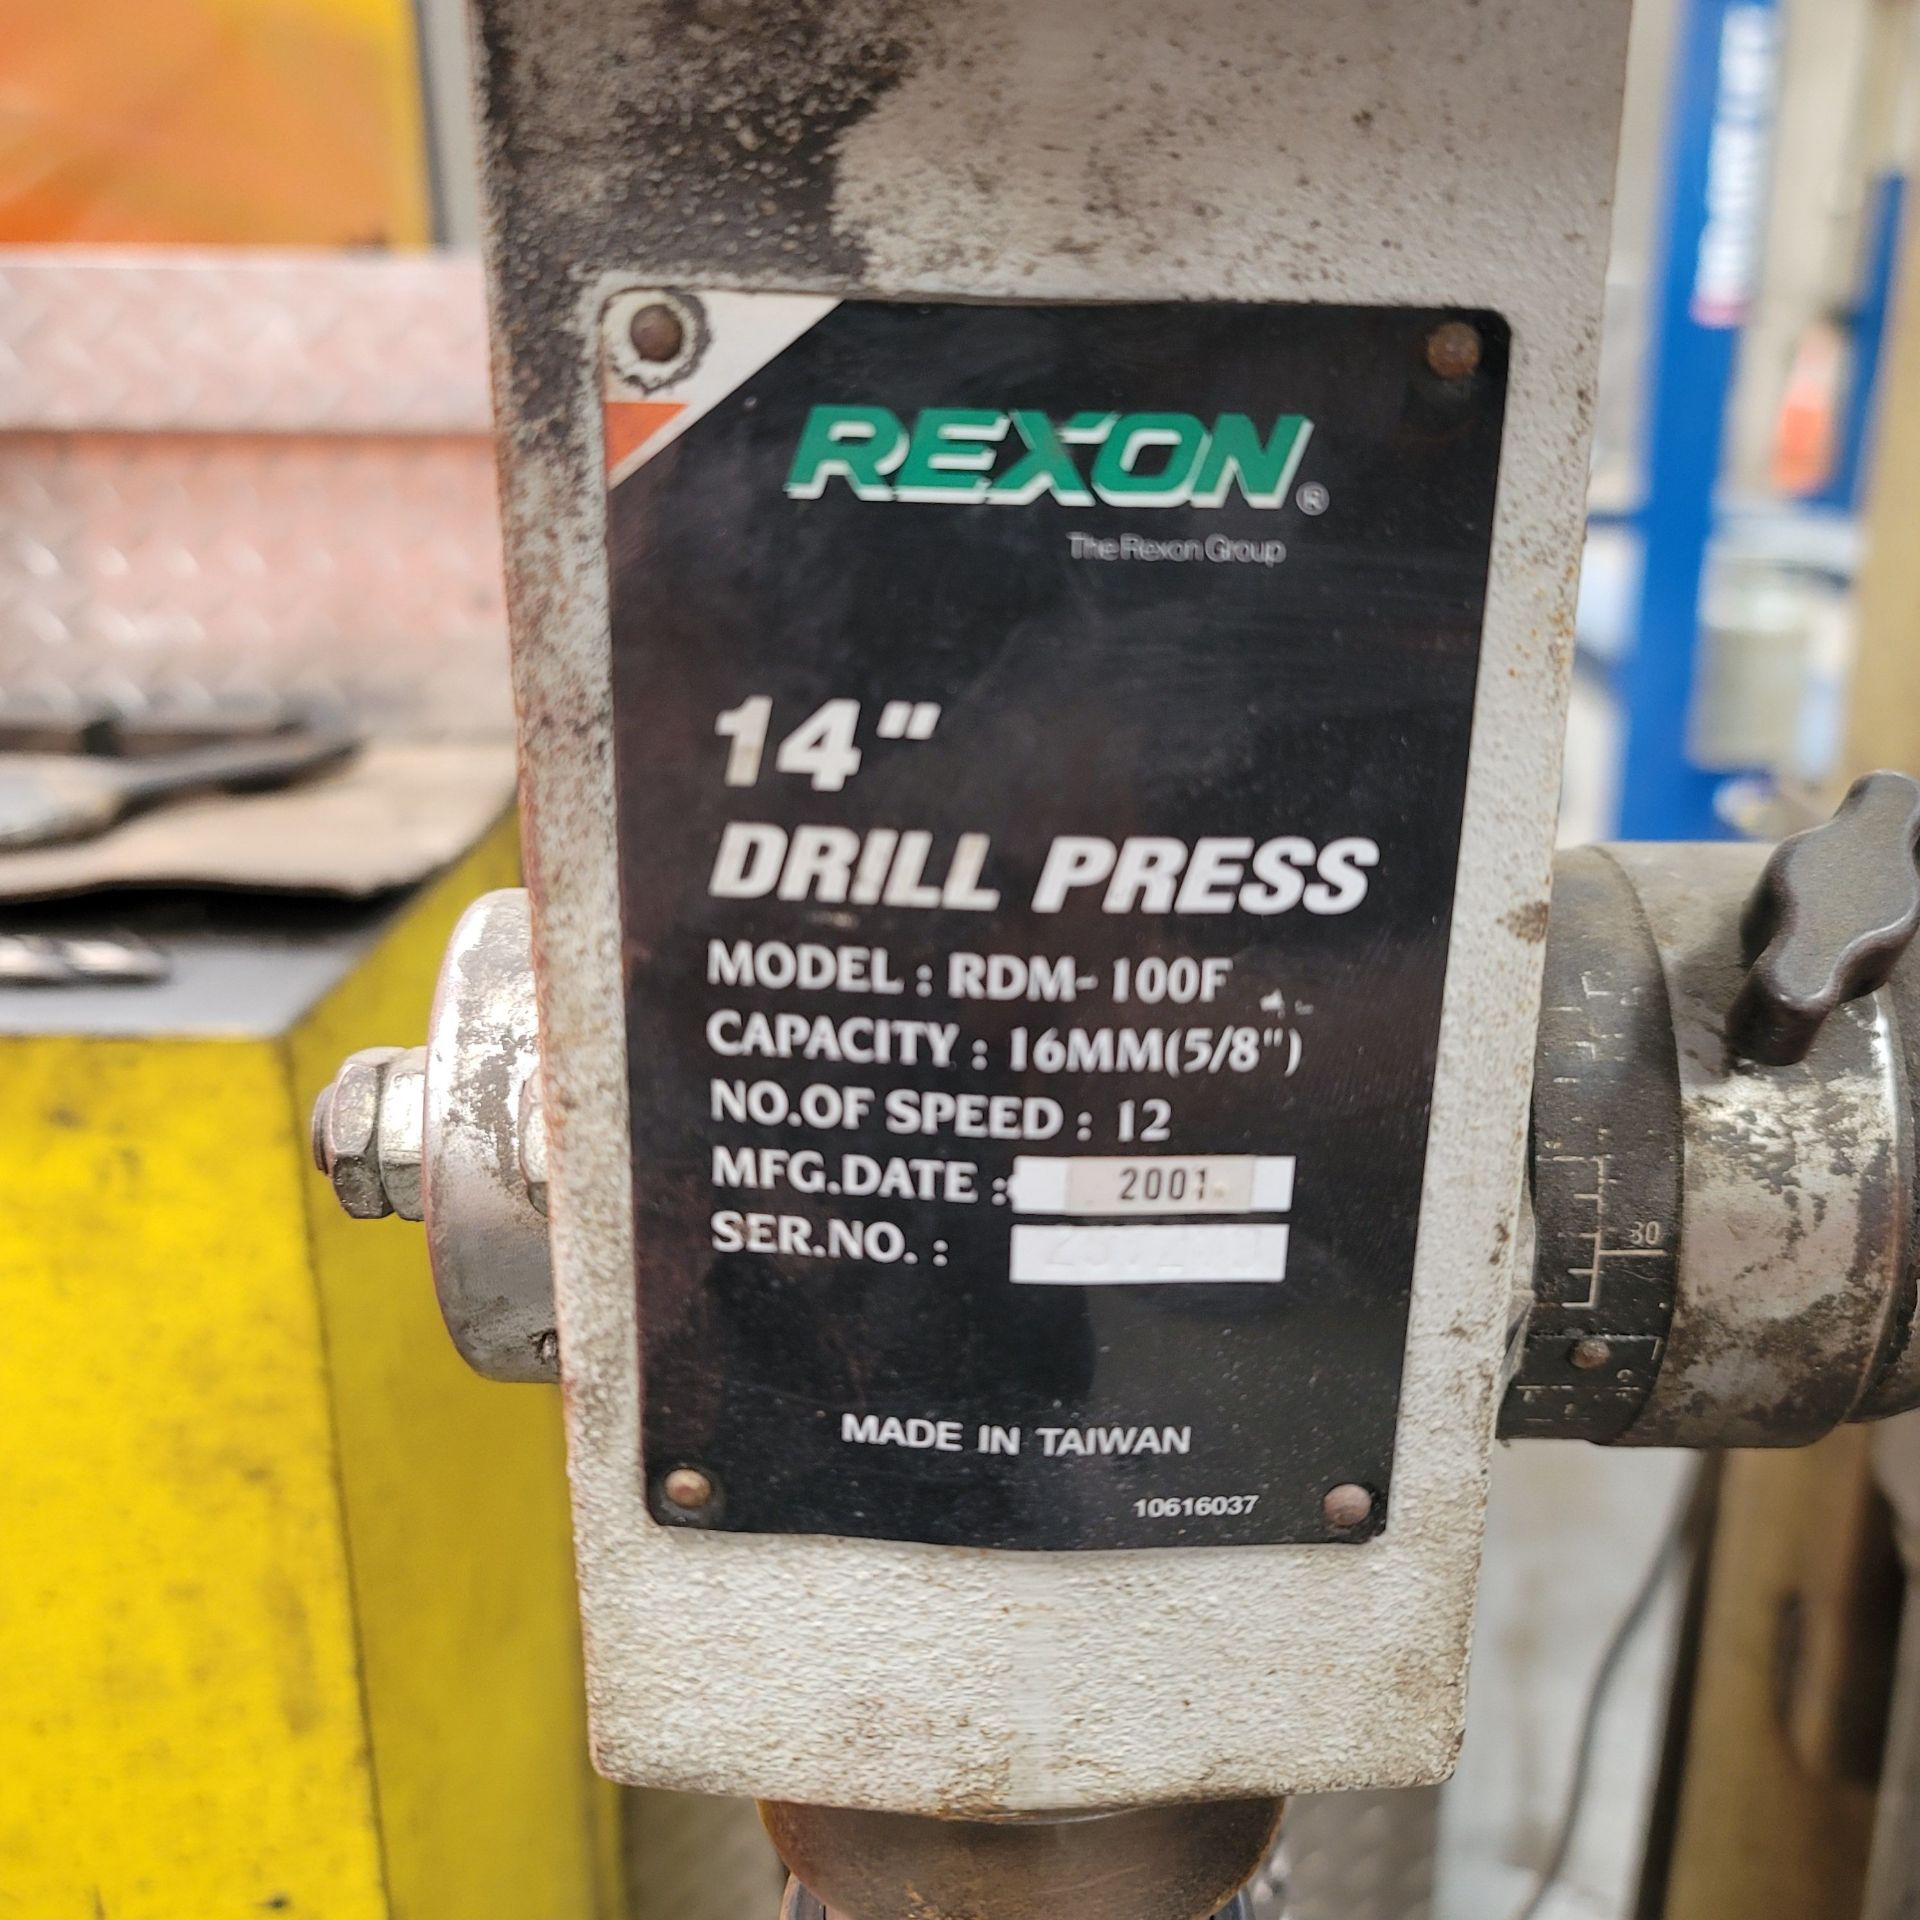 REXON 14" DRILL PRESS, MODEL RDM-100F, 12-SPEED, S/N 257279 - Image 2 of 3